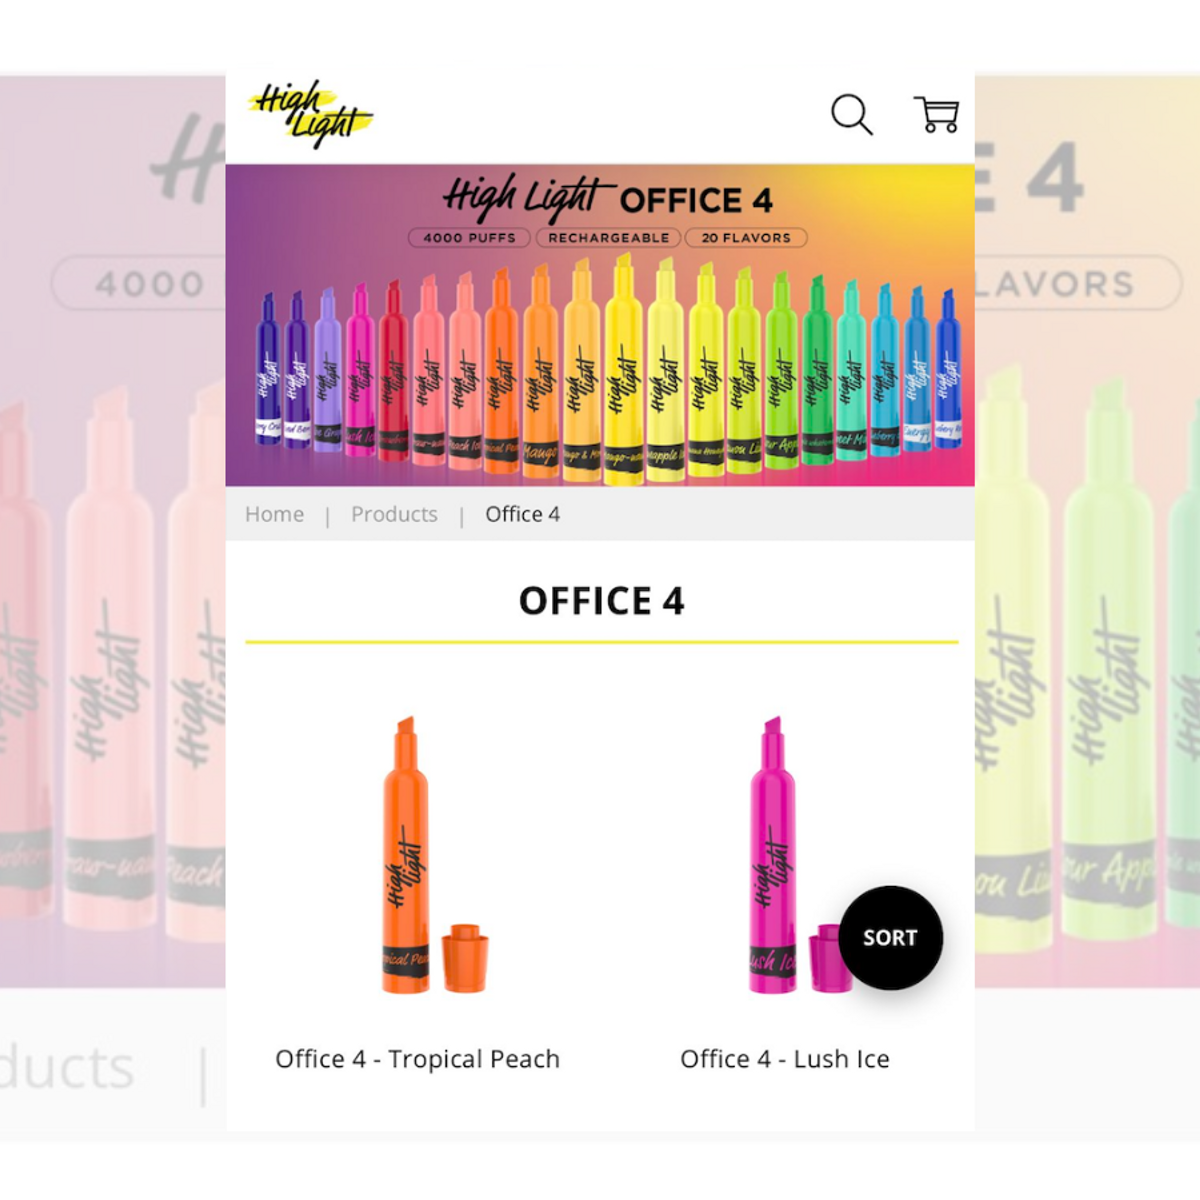 USD 469 - Highlighter Vape Pens Add New Layer of Haze to School